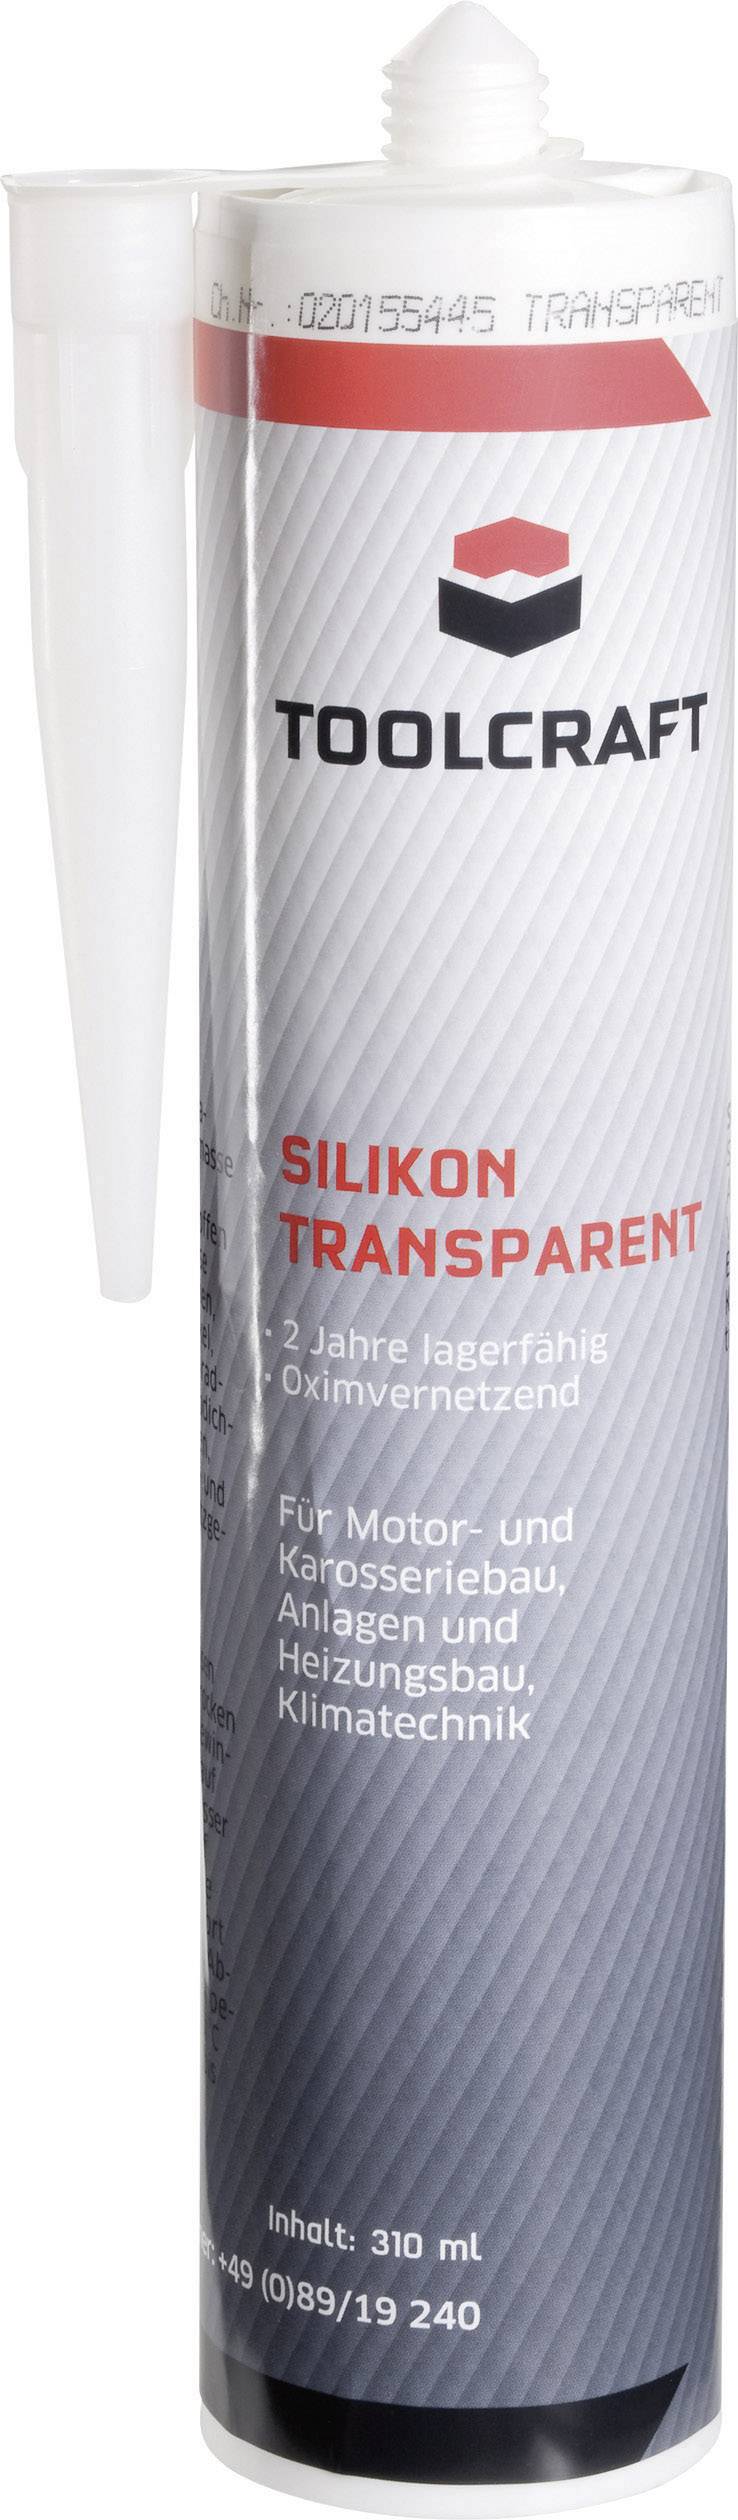 Silikon transparent 310 ml